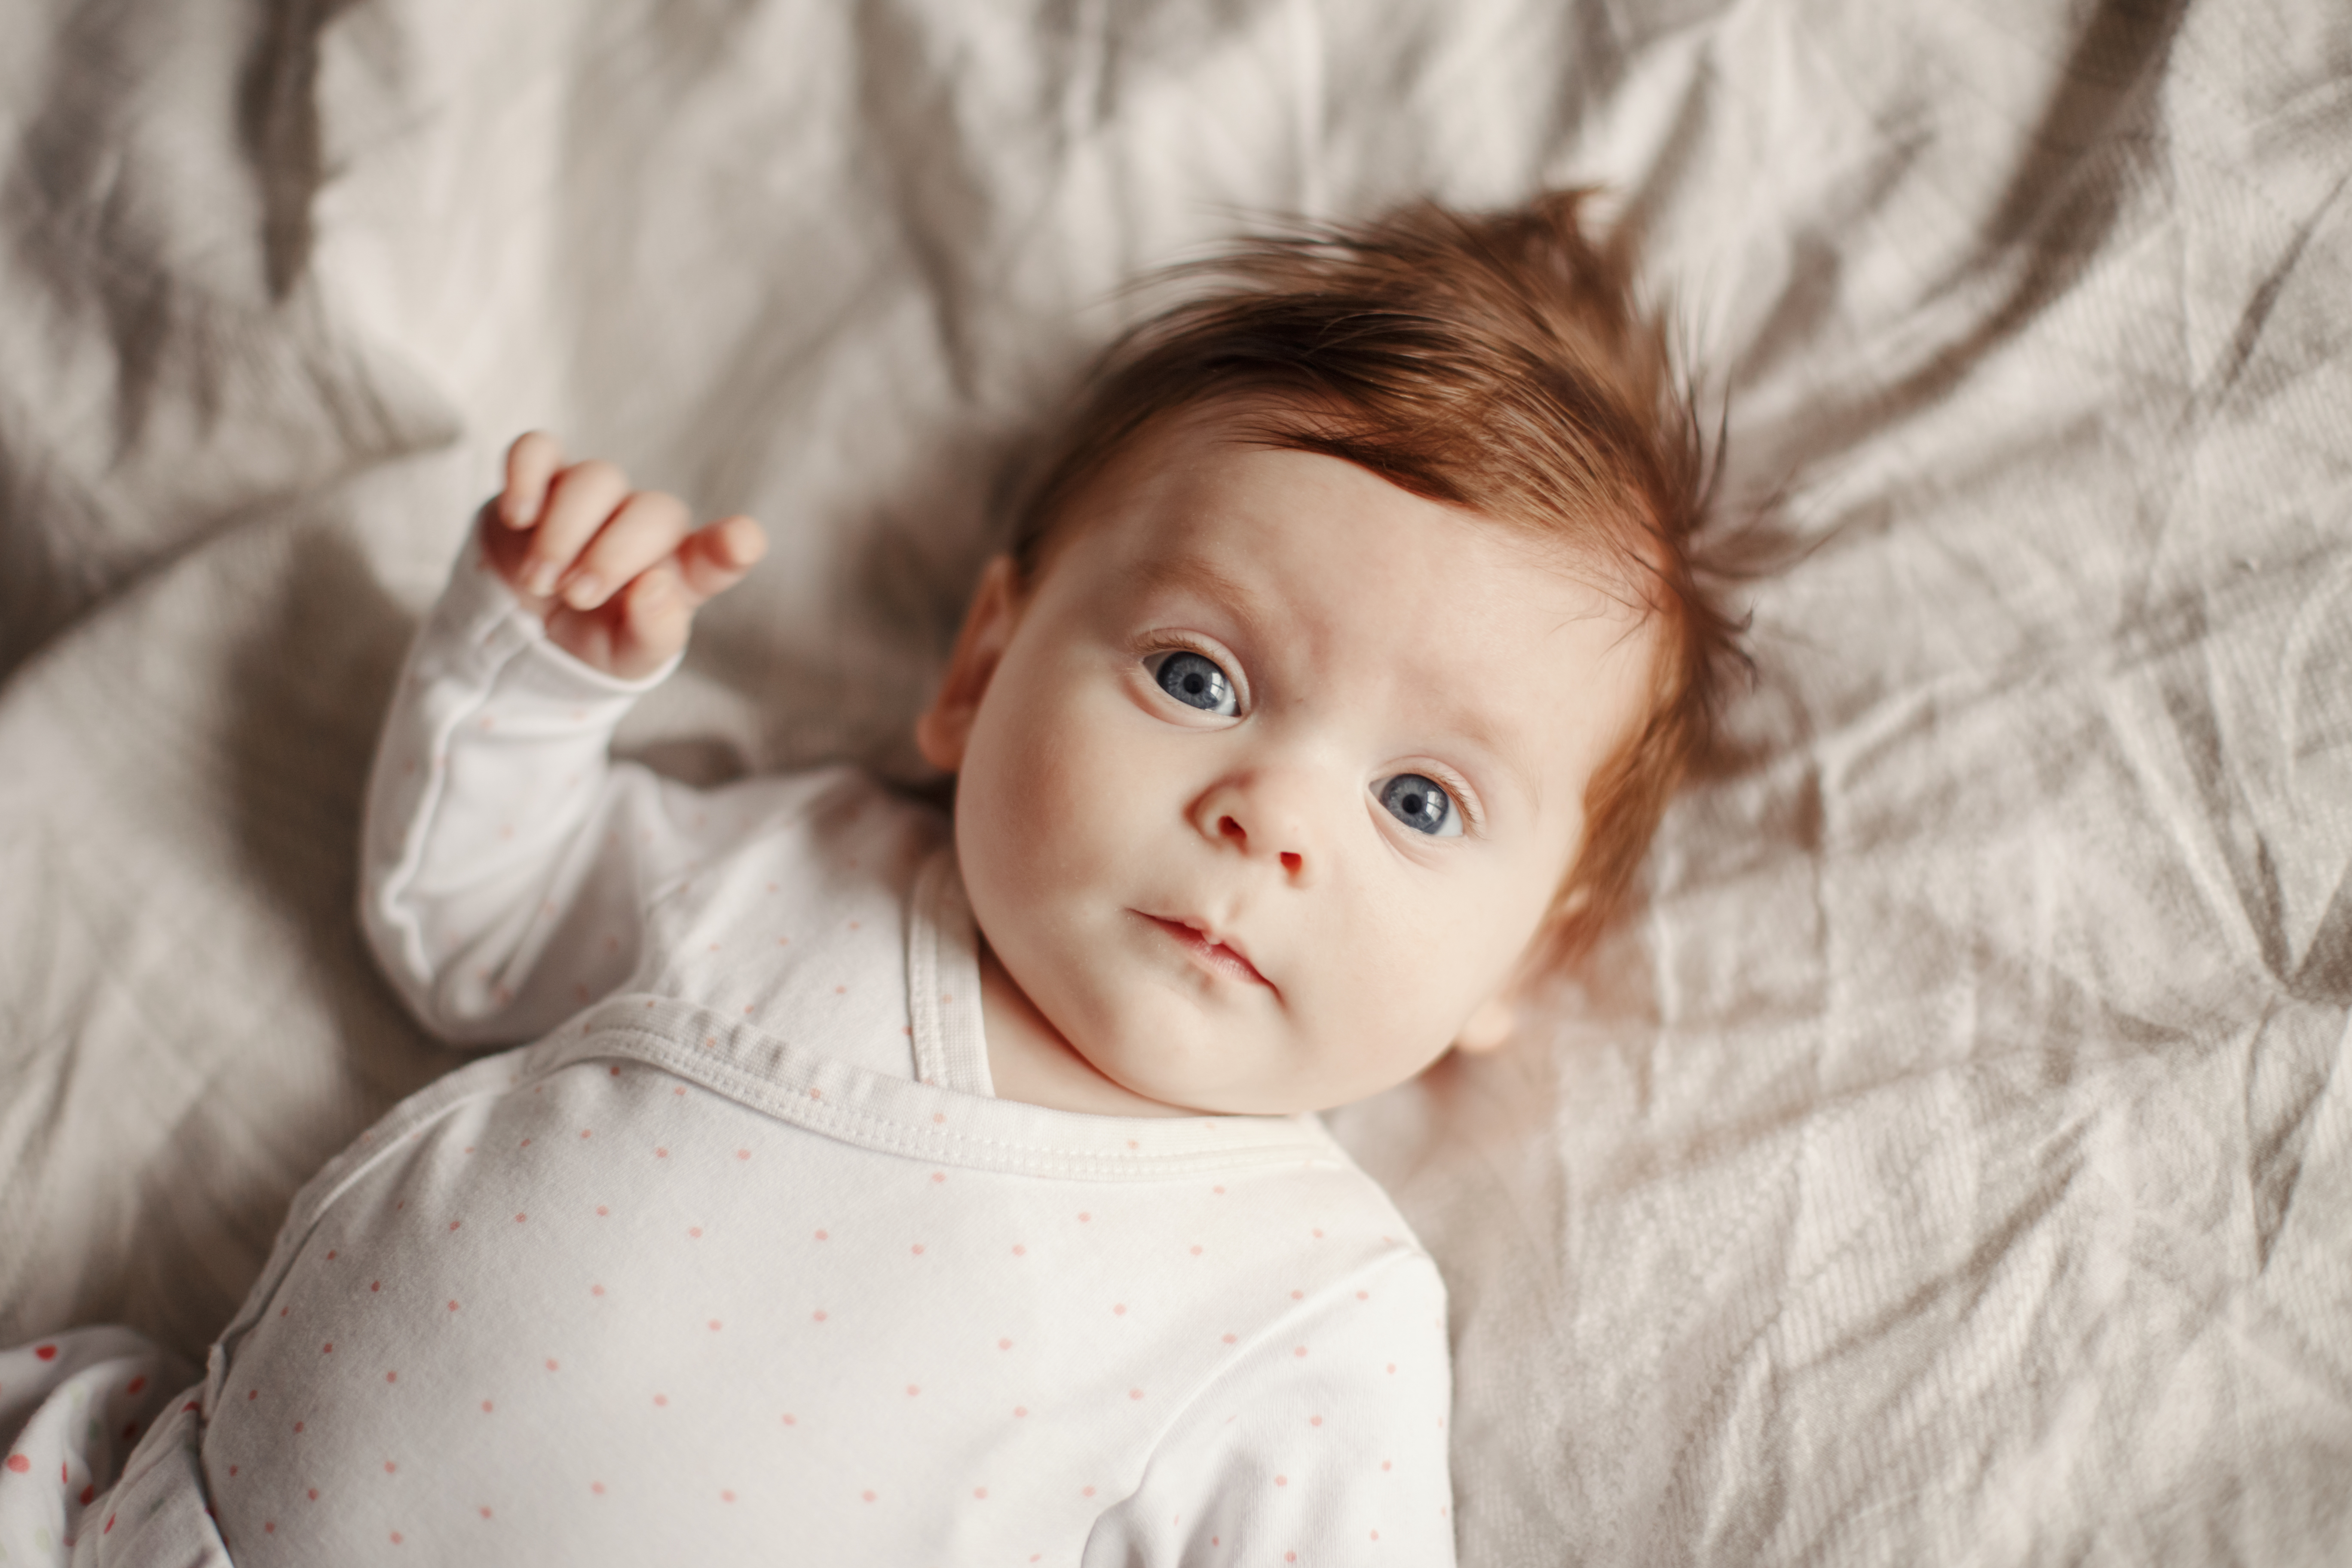 Close-up of a newborn baby | Source: Shutterstock